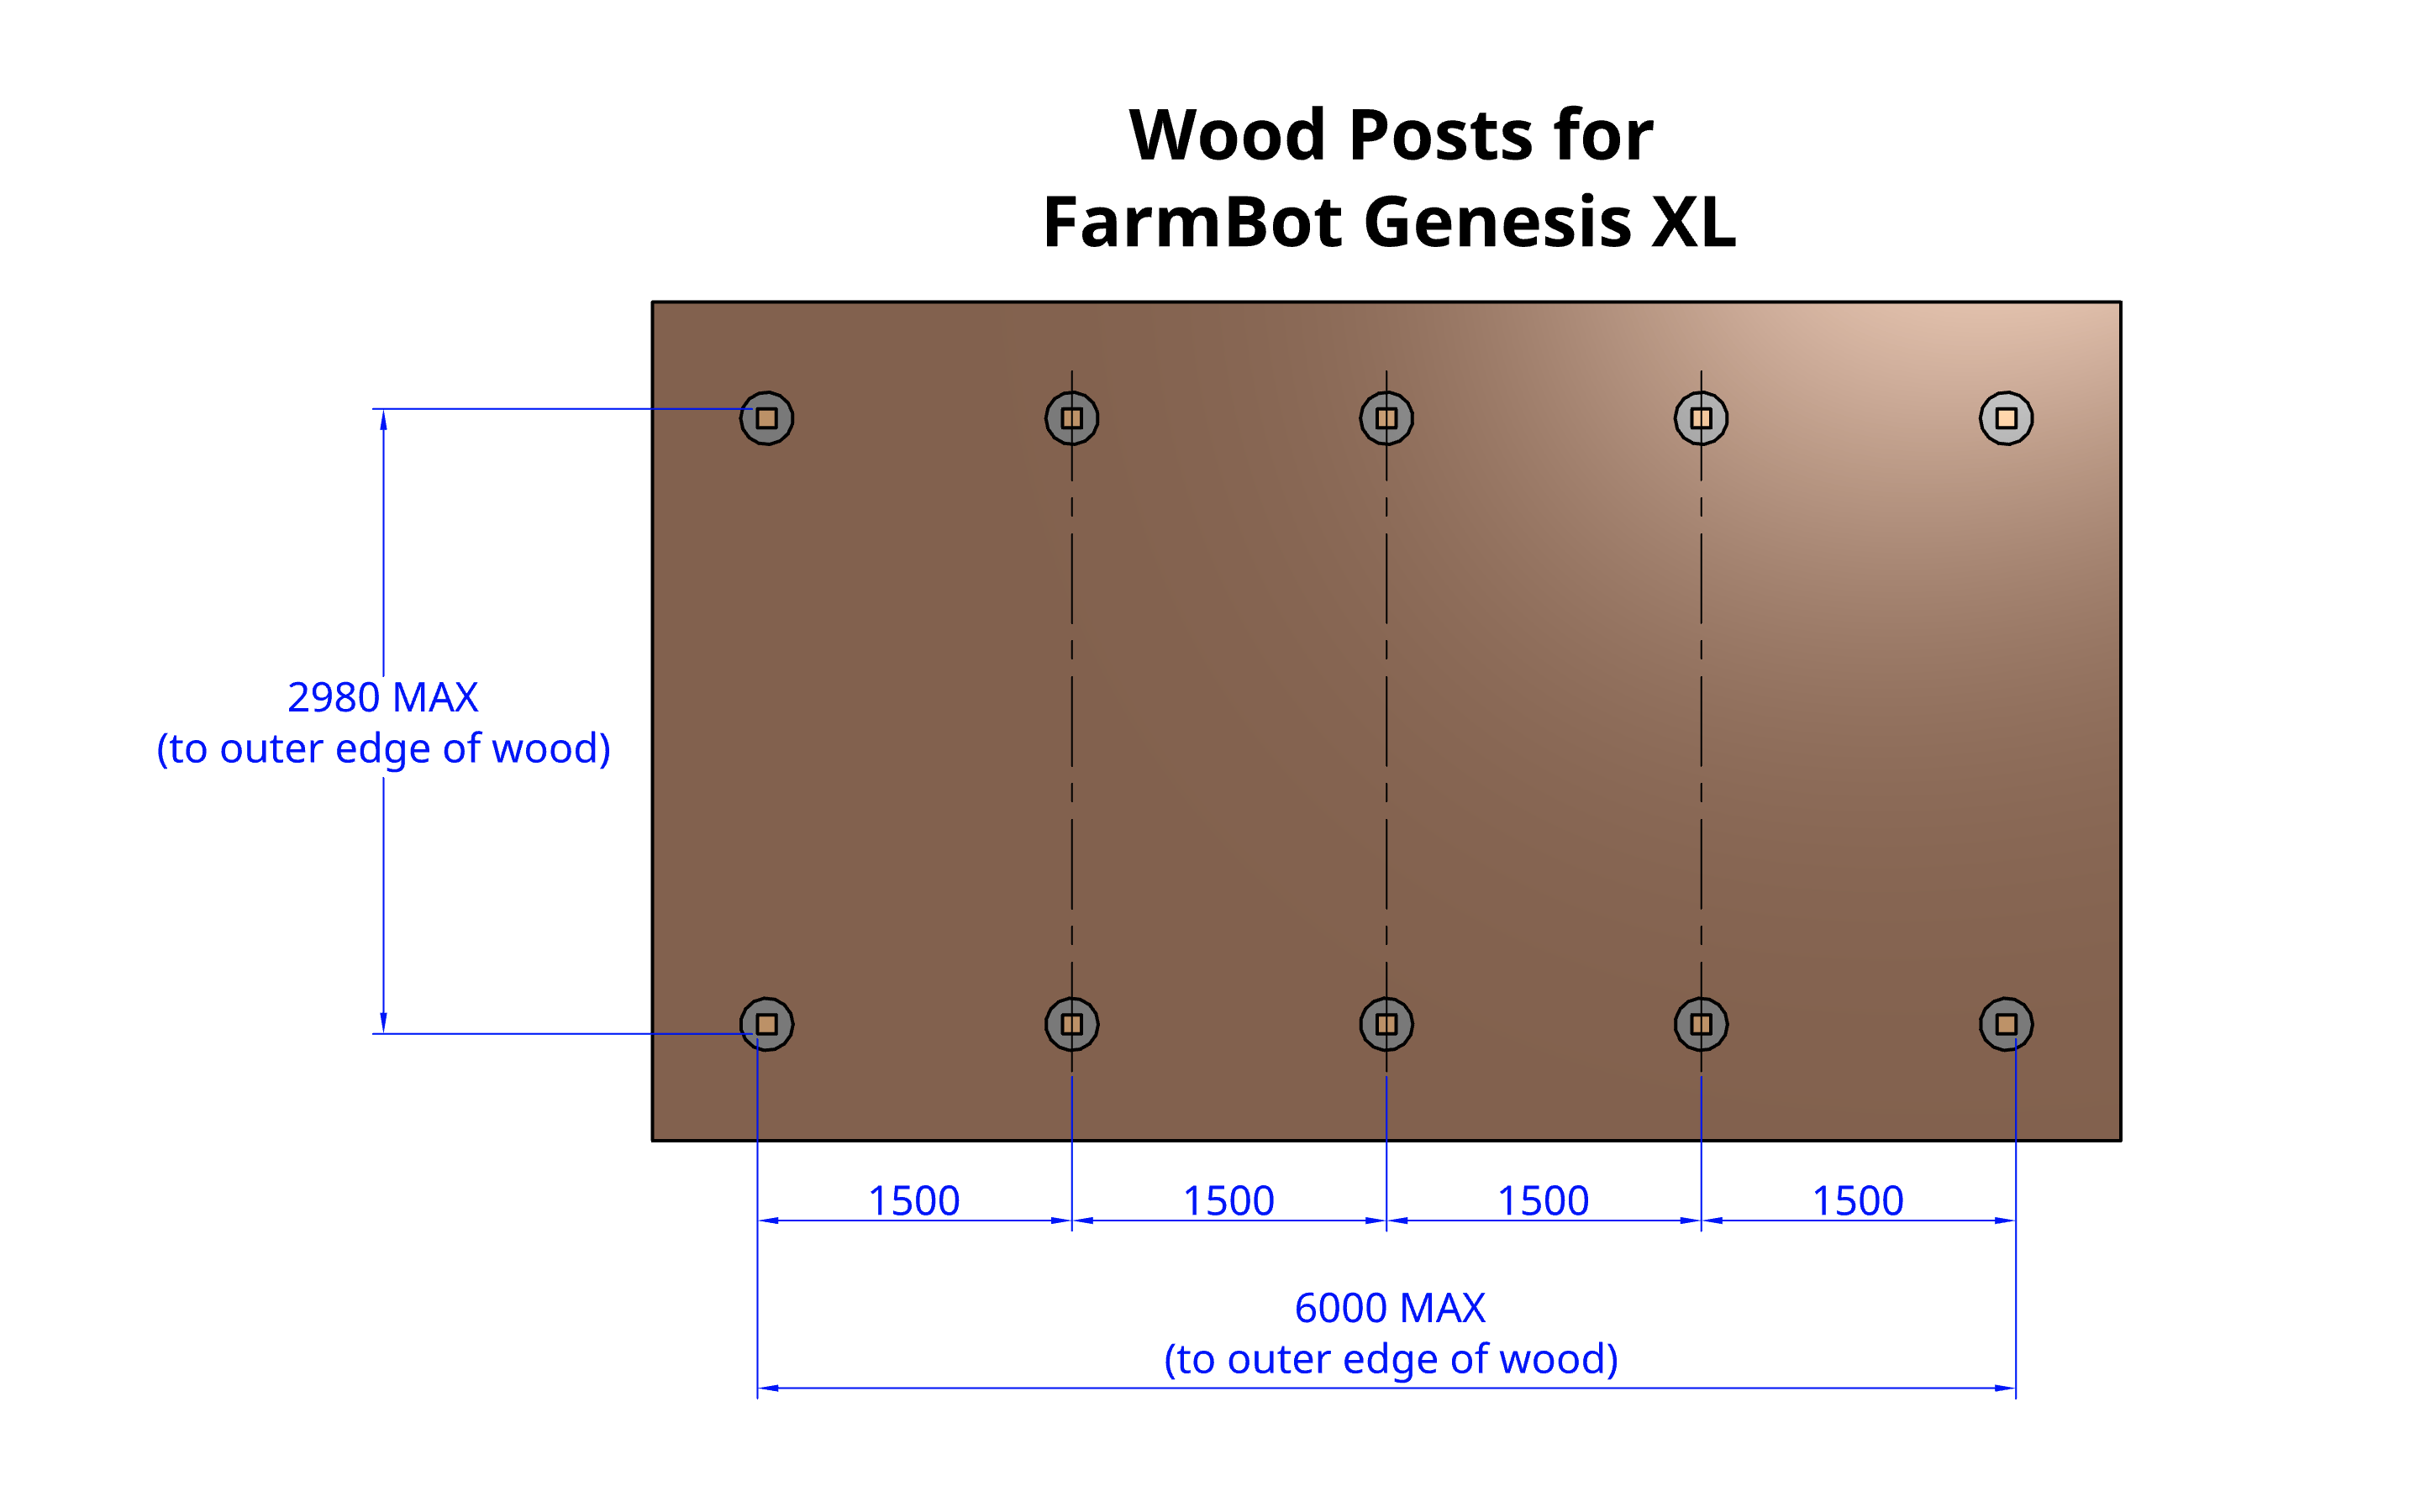 FarmBot Genesis XL wood post hole layout